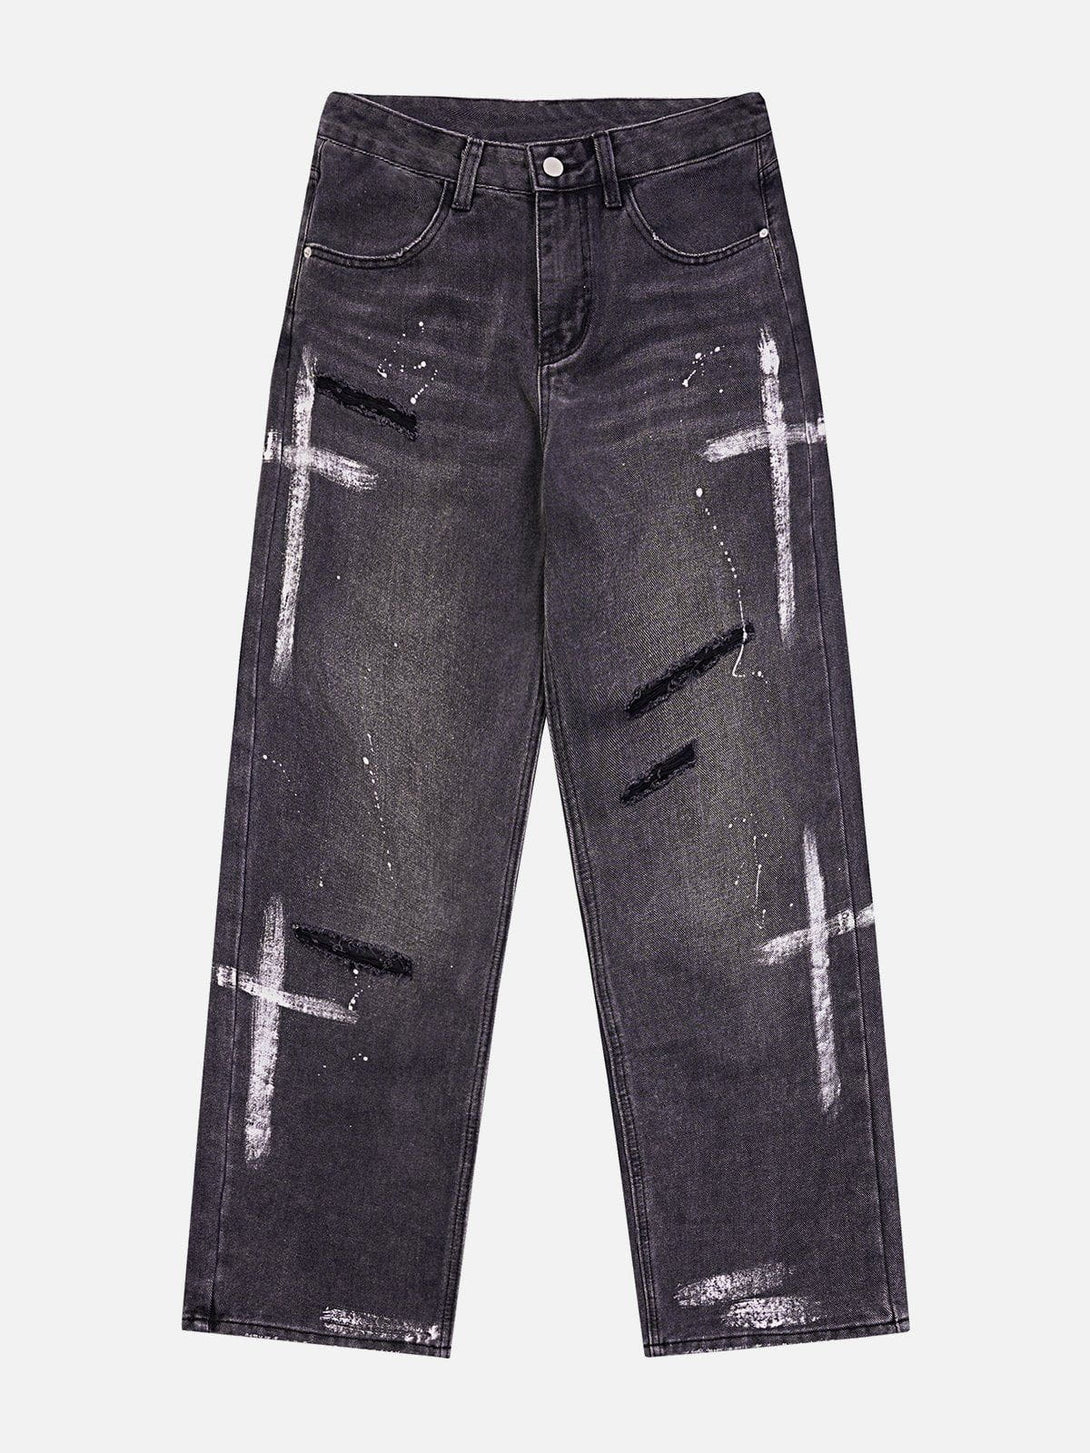 AlanBalen® - Hand Painted Cross Hole Jeans AlanBalen